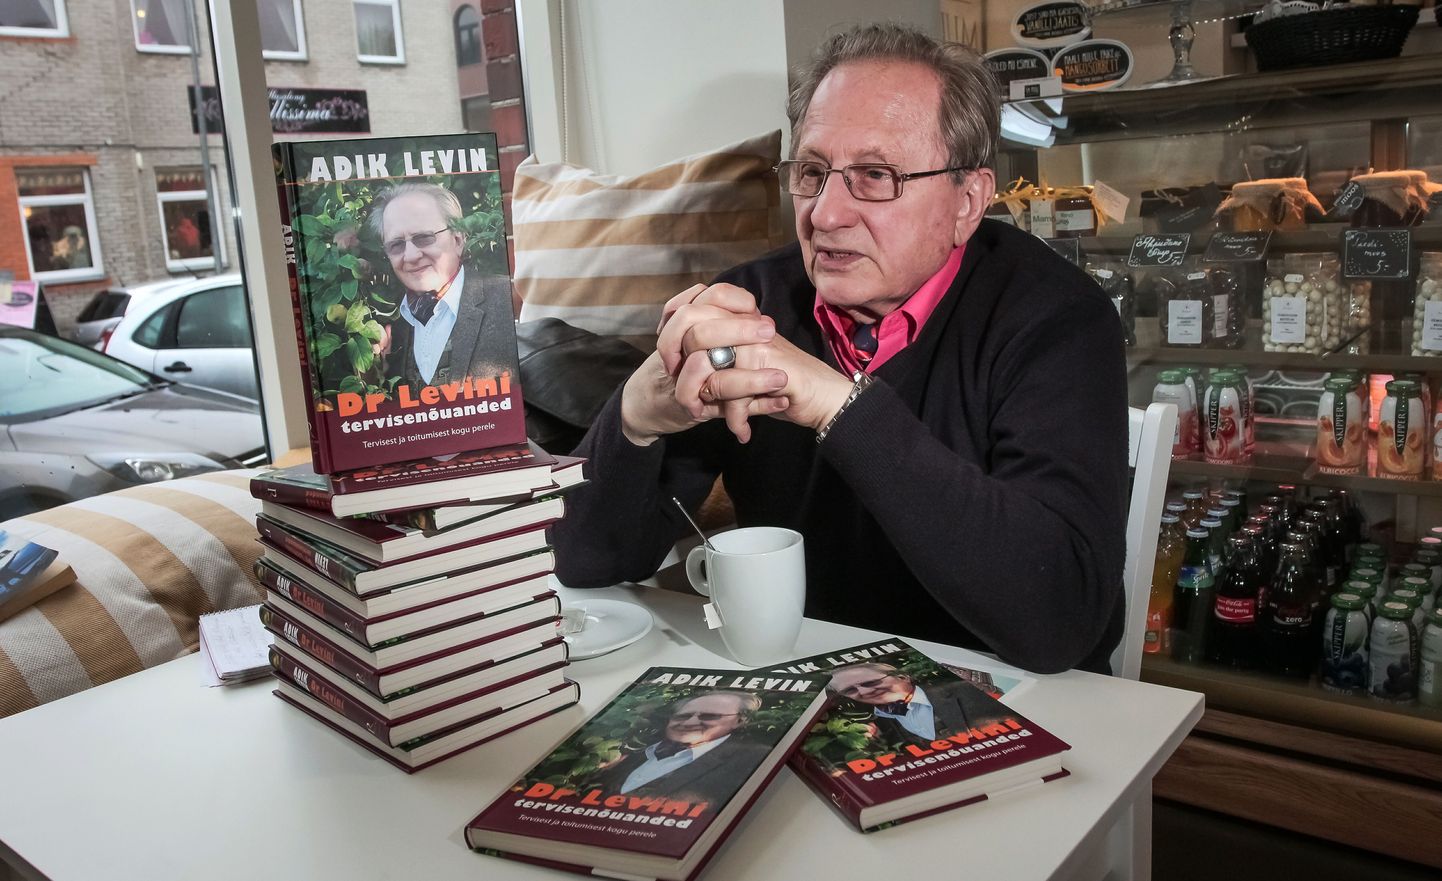 Dr Adik Levin